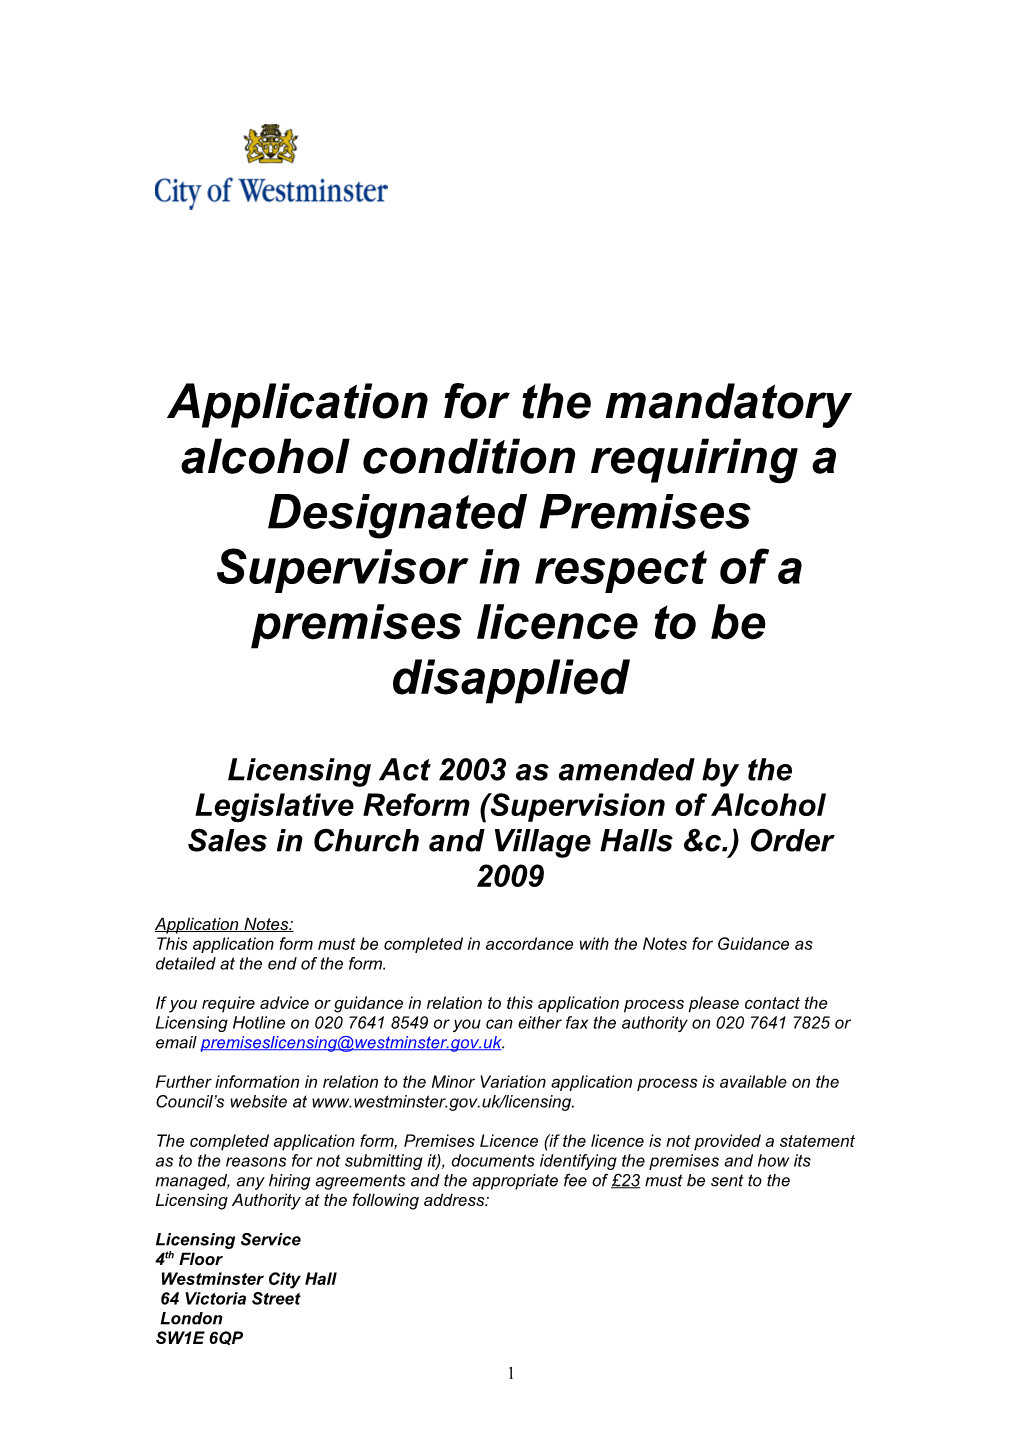 Application for the Mandatory Alcohol Condition Requiring a Designated Premises Supervisor